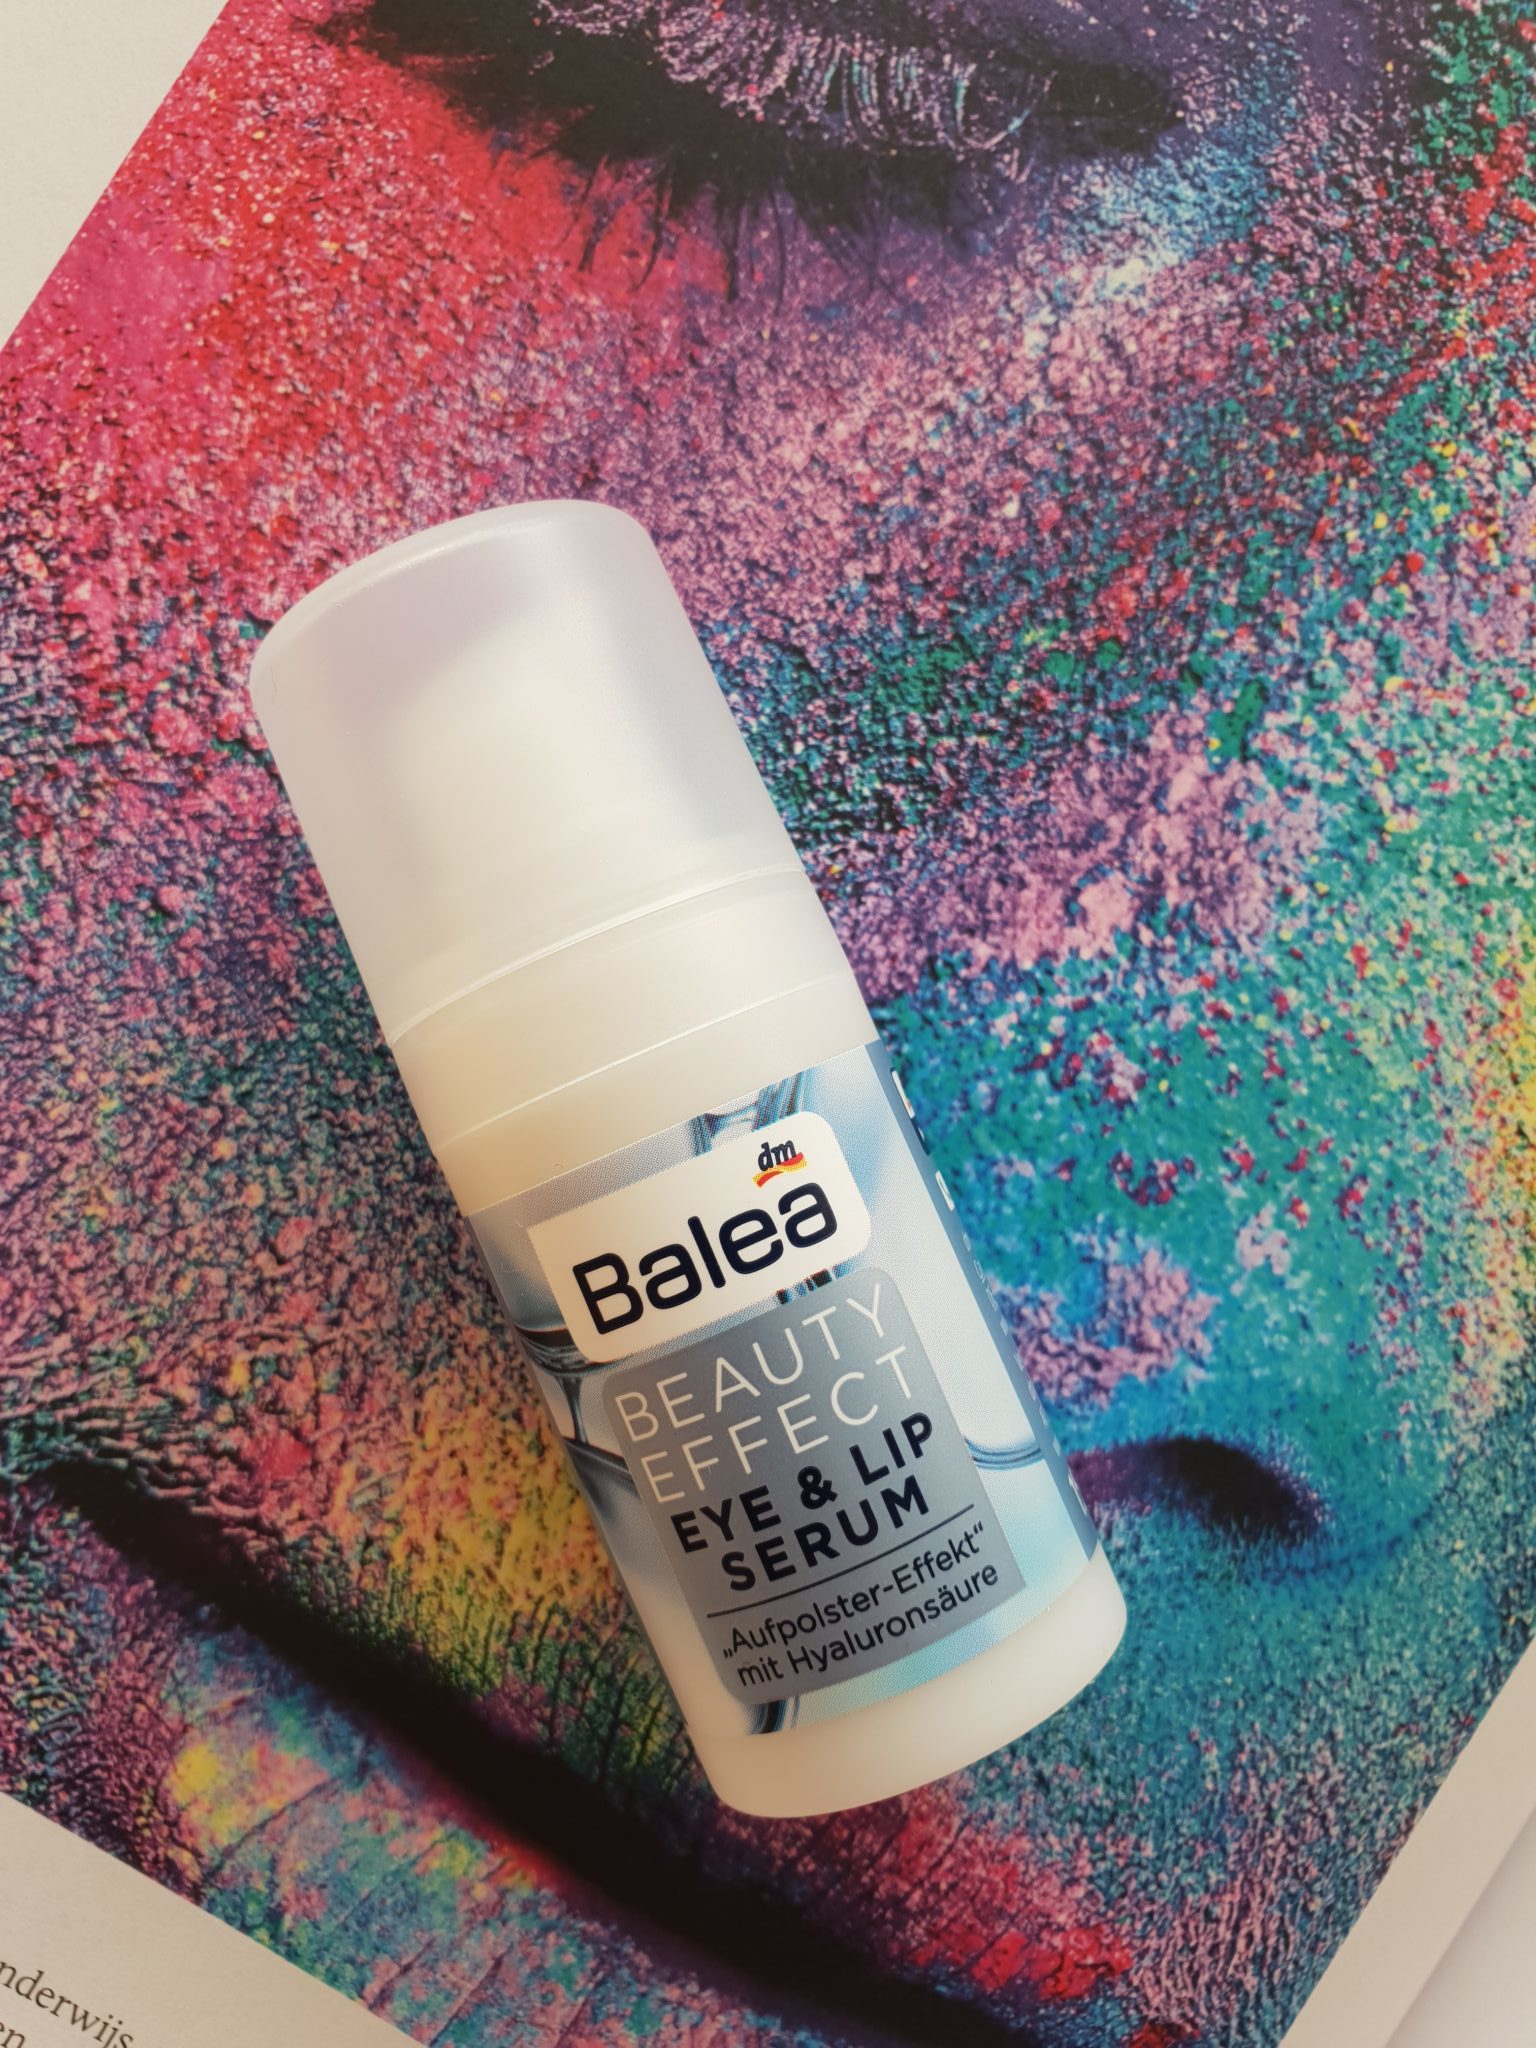 Beauty || Balea Eye & Lip serum